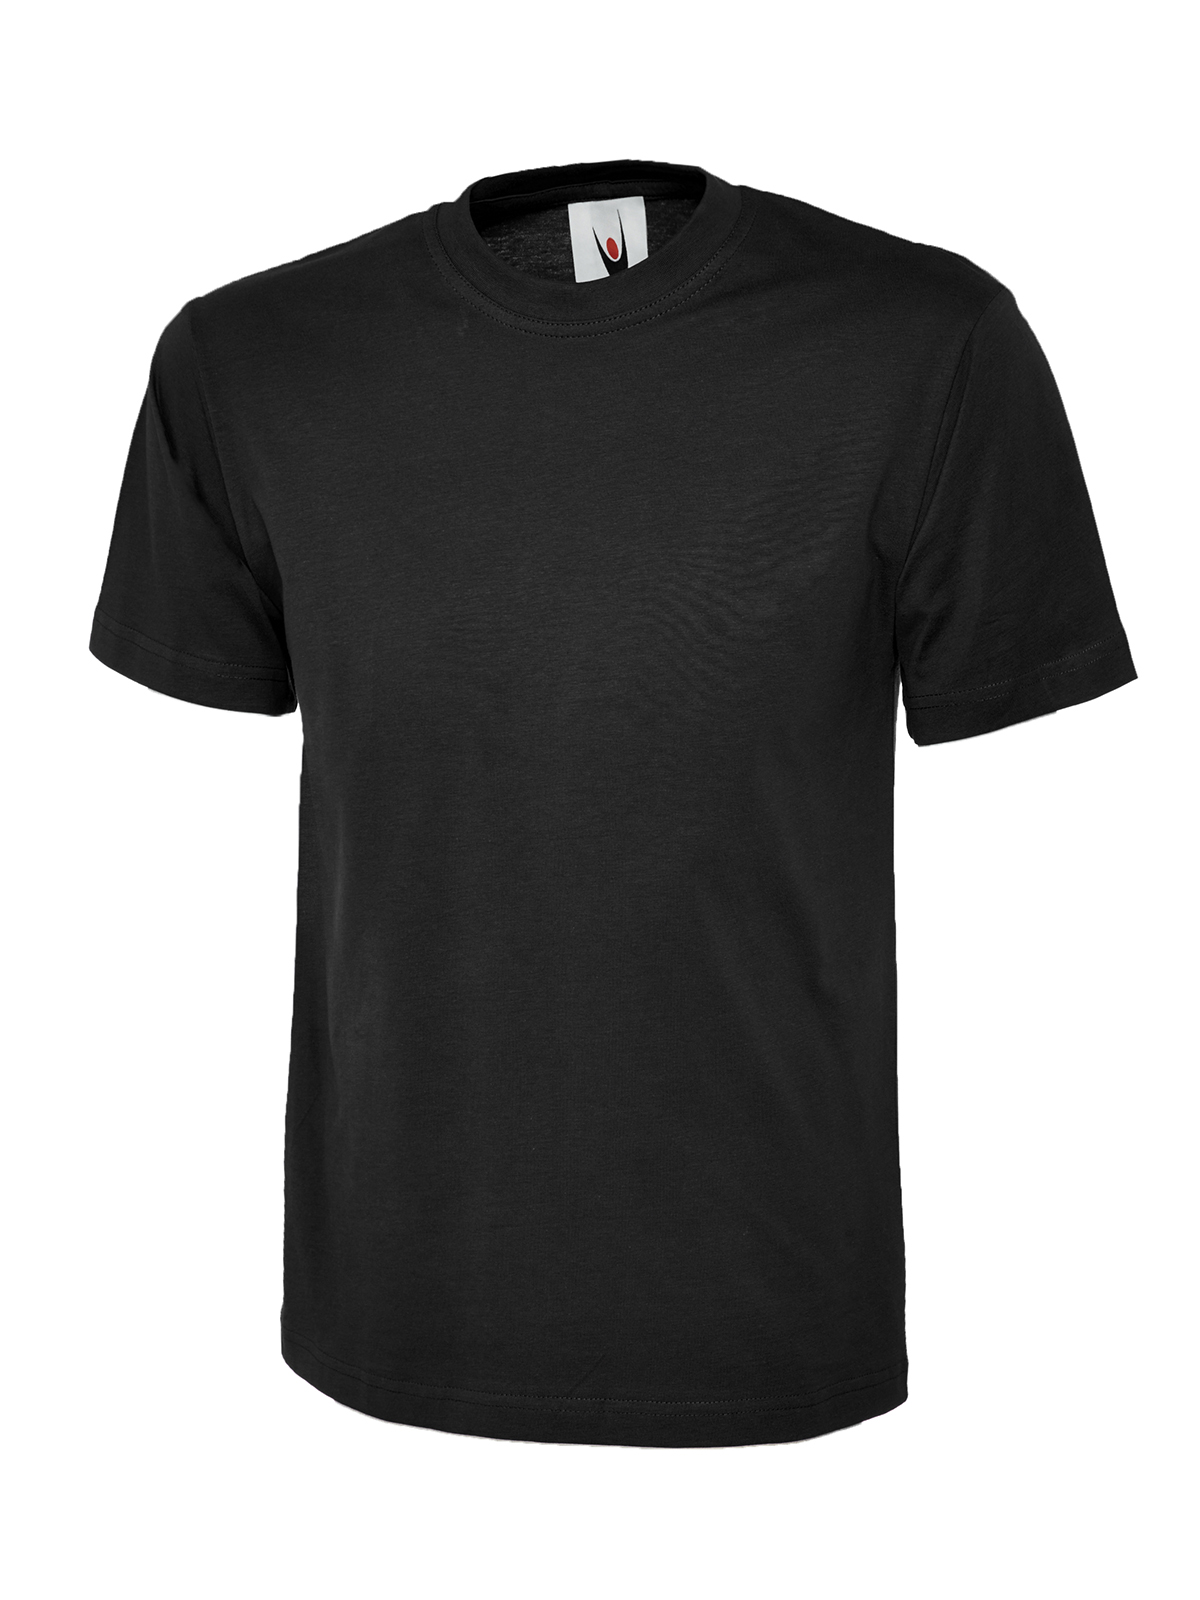 Uc301 180gsm classic t-shirt - black - medium